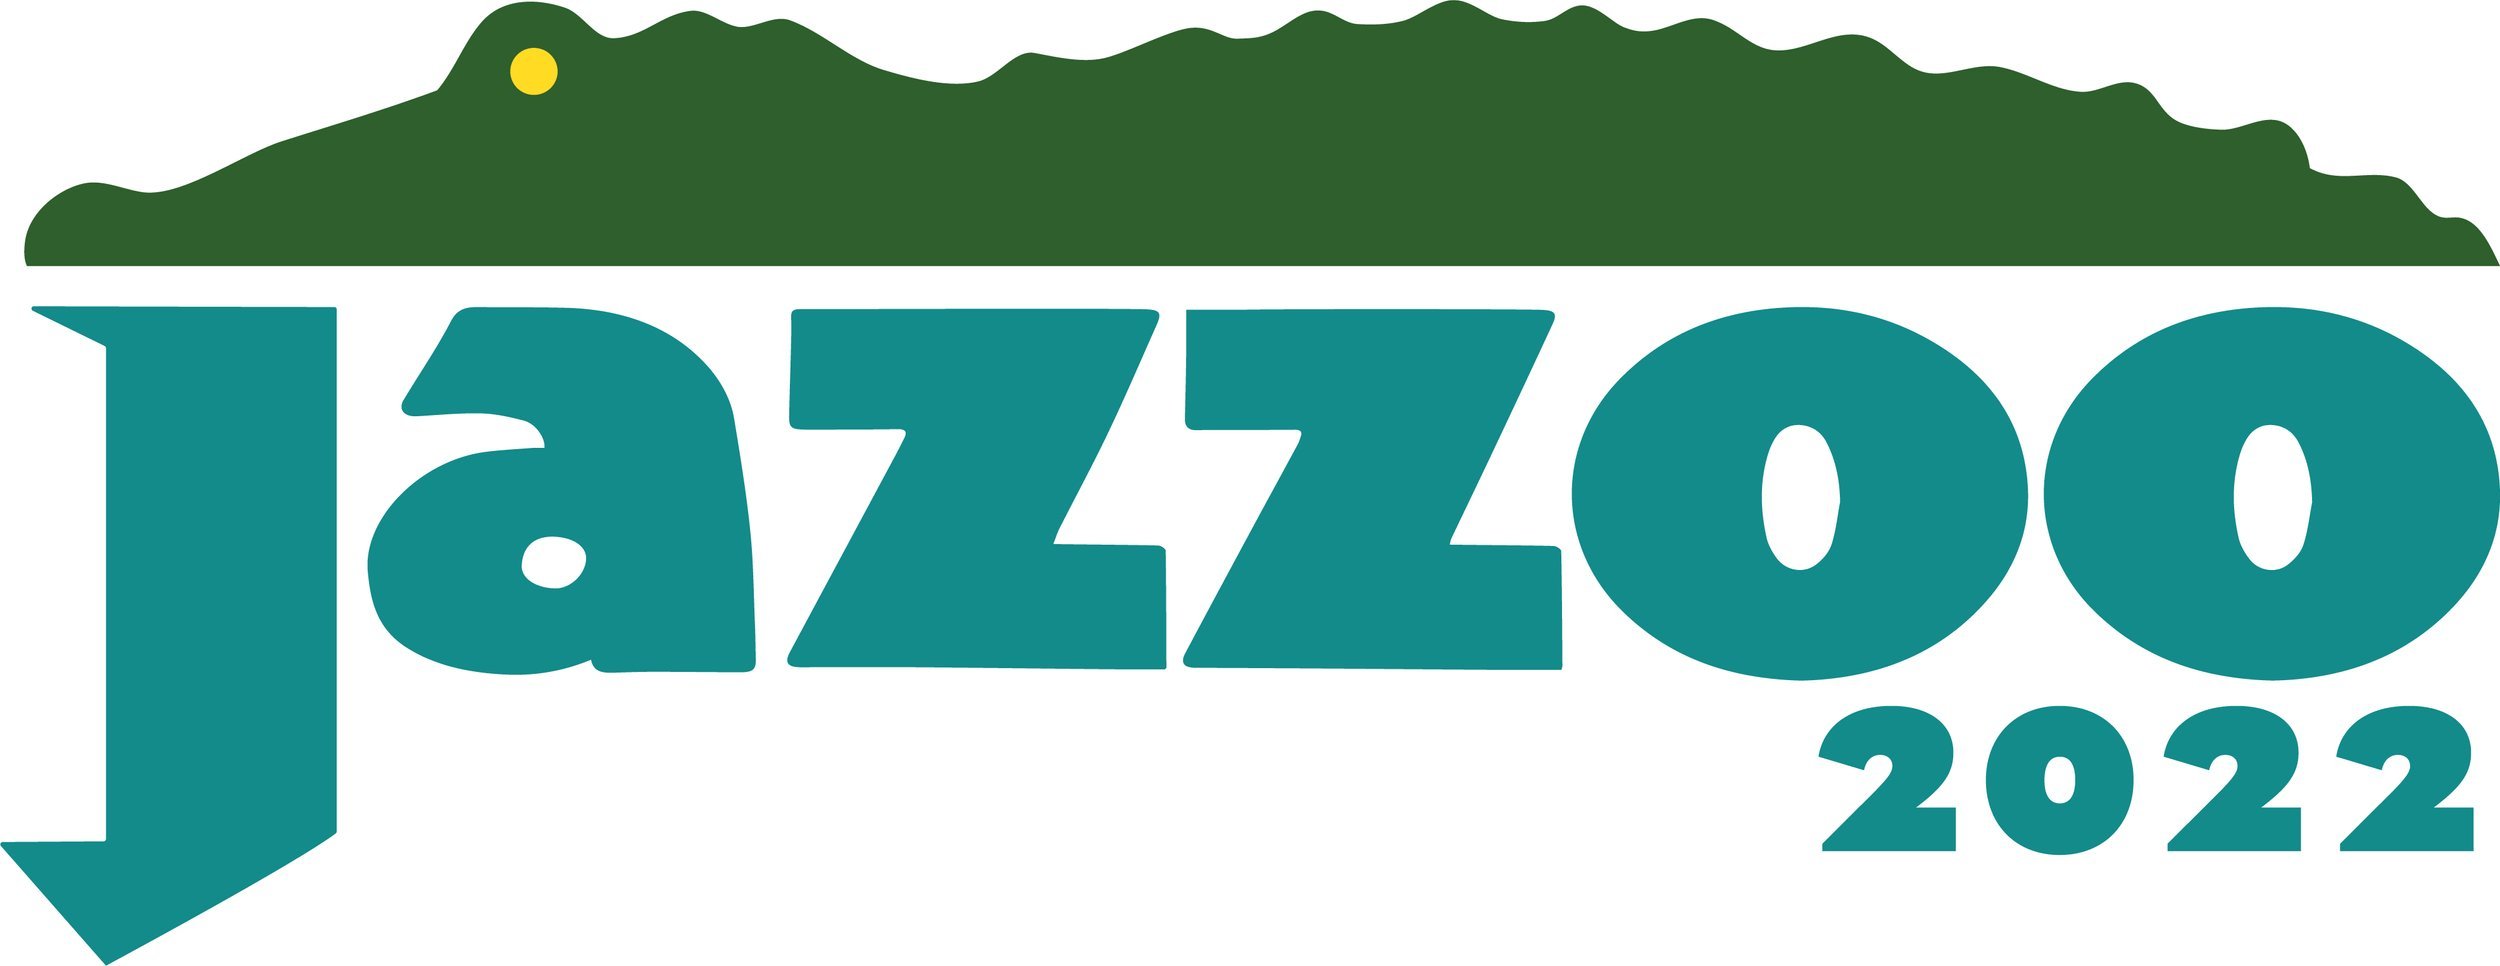 Jazzoo+2022+logo_color.jpg